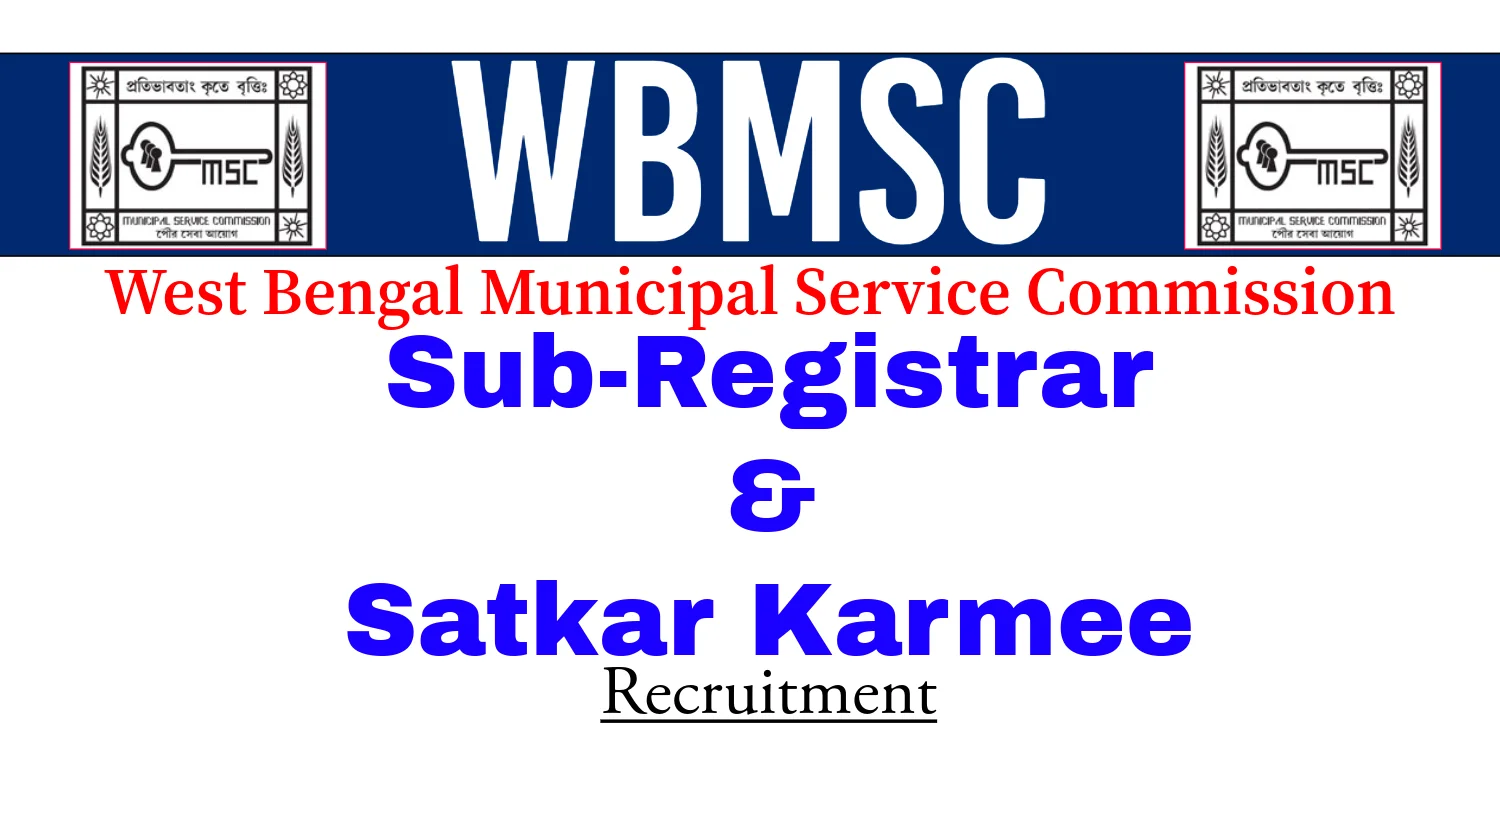 WBMSC Sub-Registrar and Satkar Karmee Recruitment